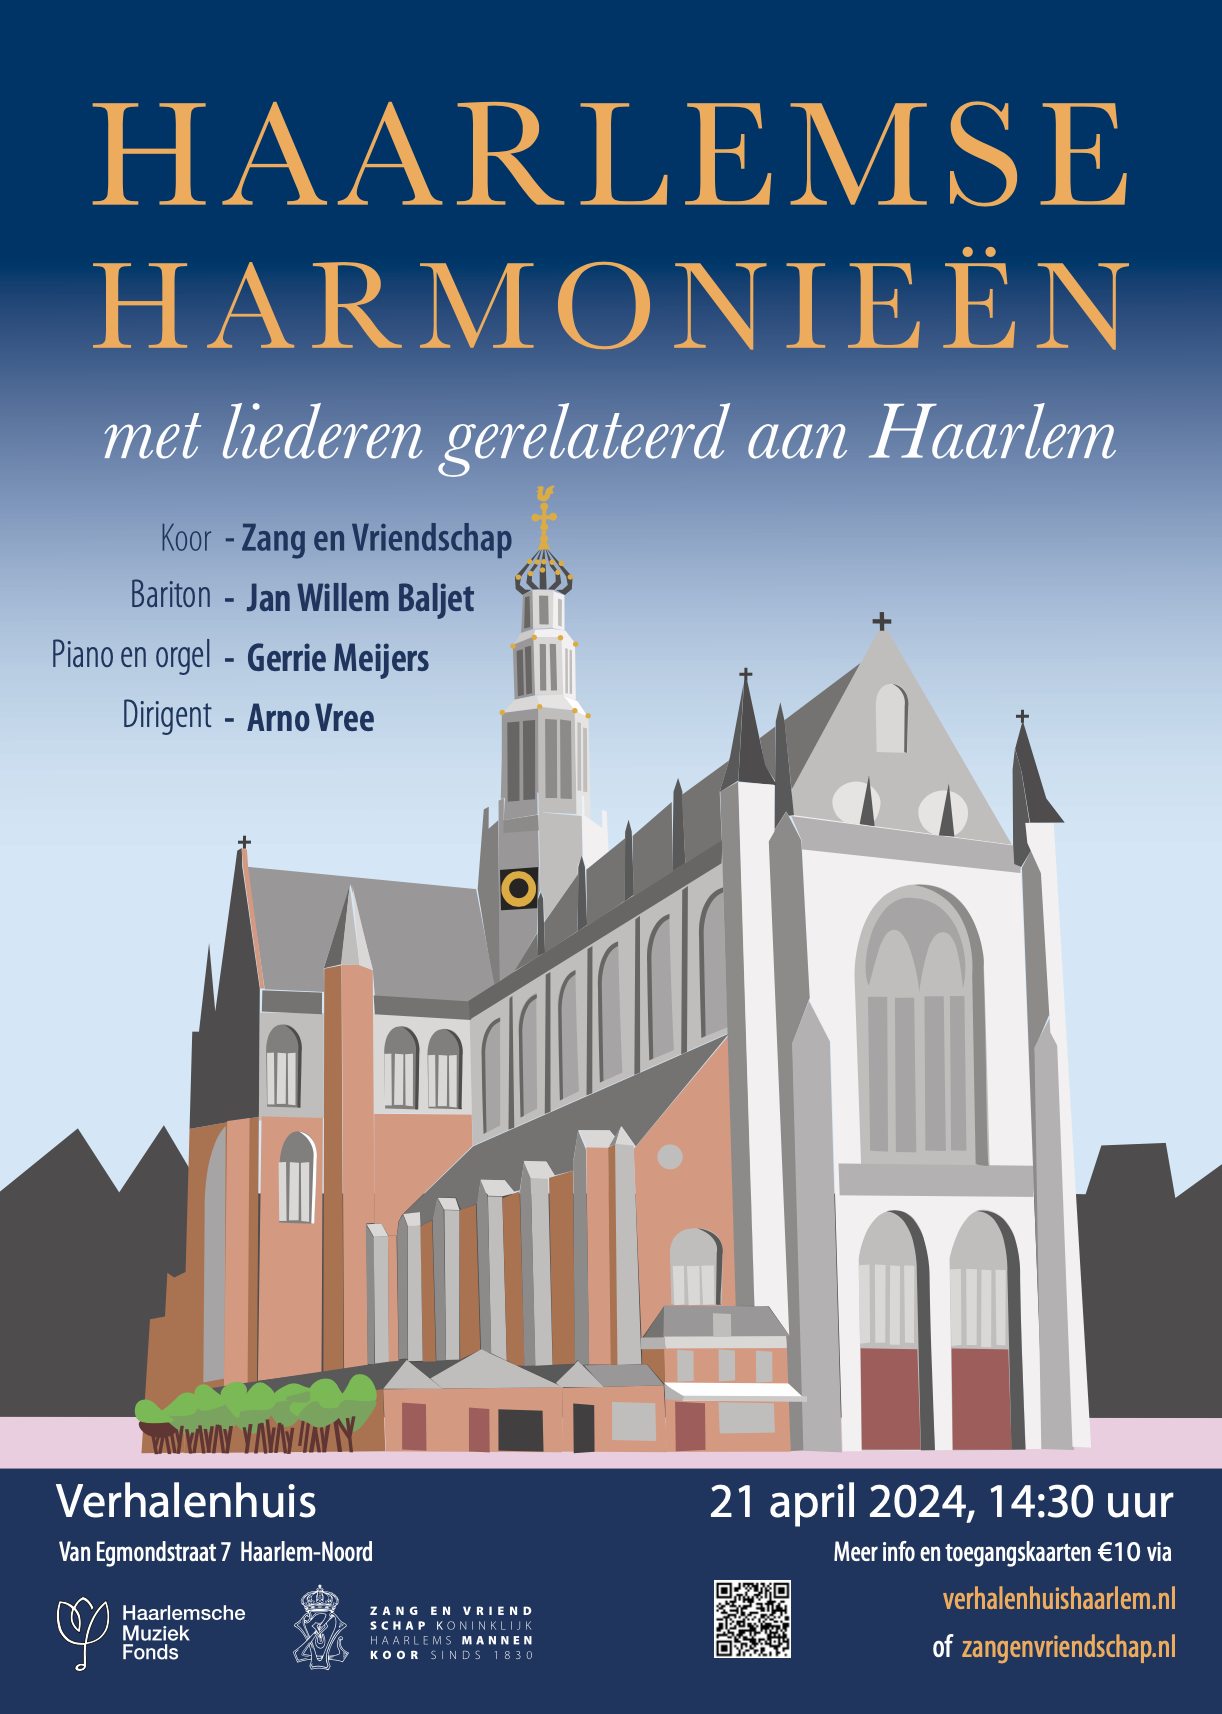 Haarlemse Harmonieen